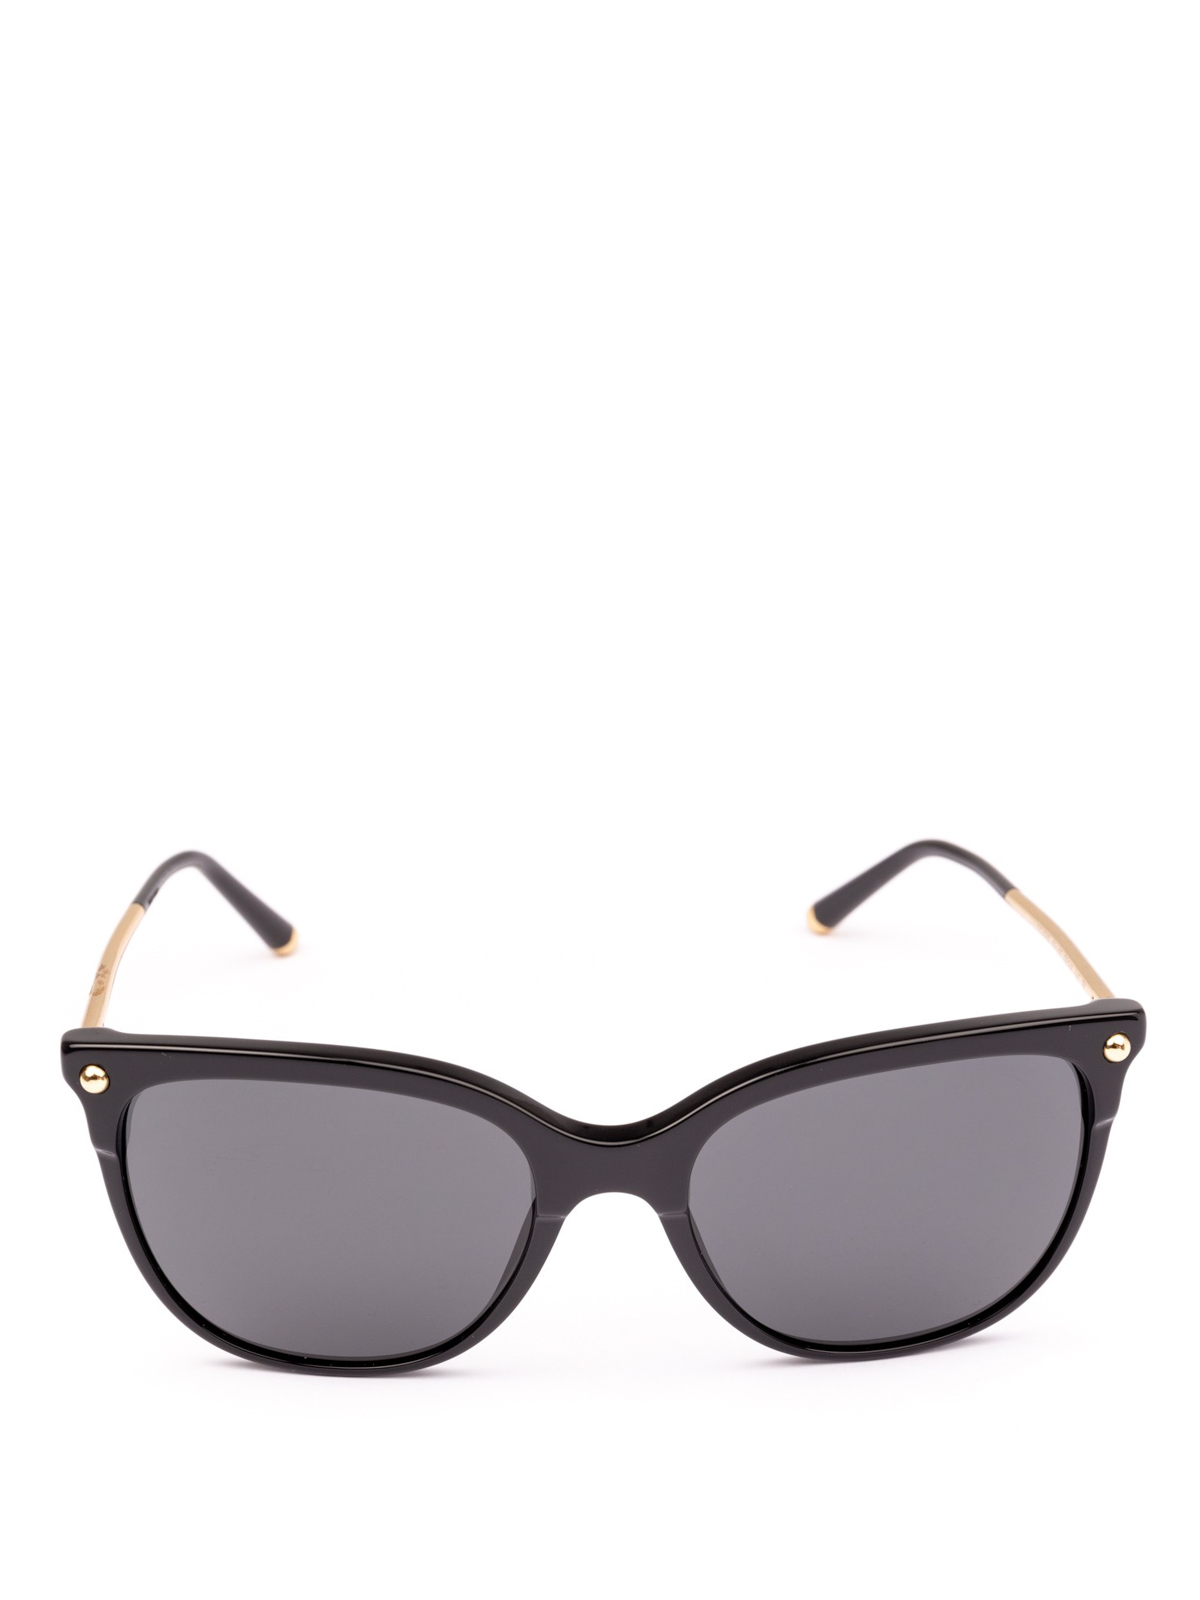 Sunglasses Dolce & Gabbana - Studded acetate square sunglasses - DG433350187